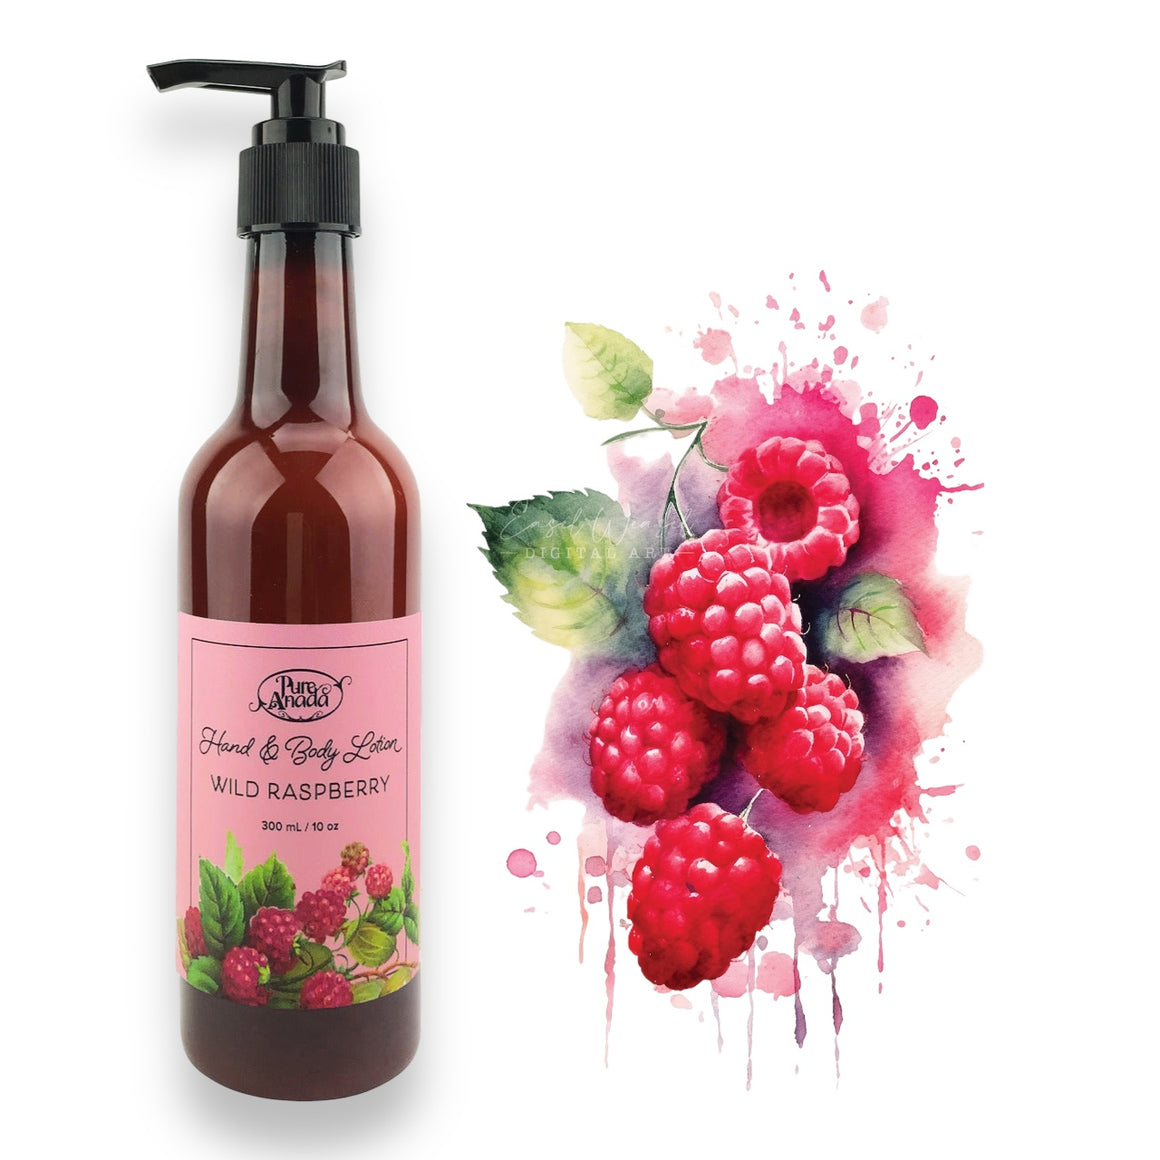 Wild Raspberry Natural Hand & Body Lotion  300ml - Pure Anada